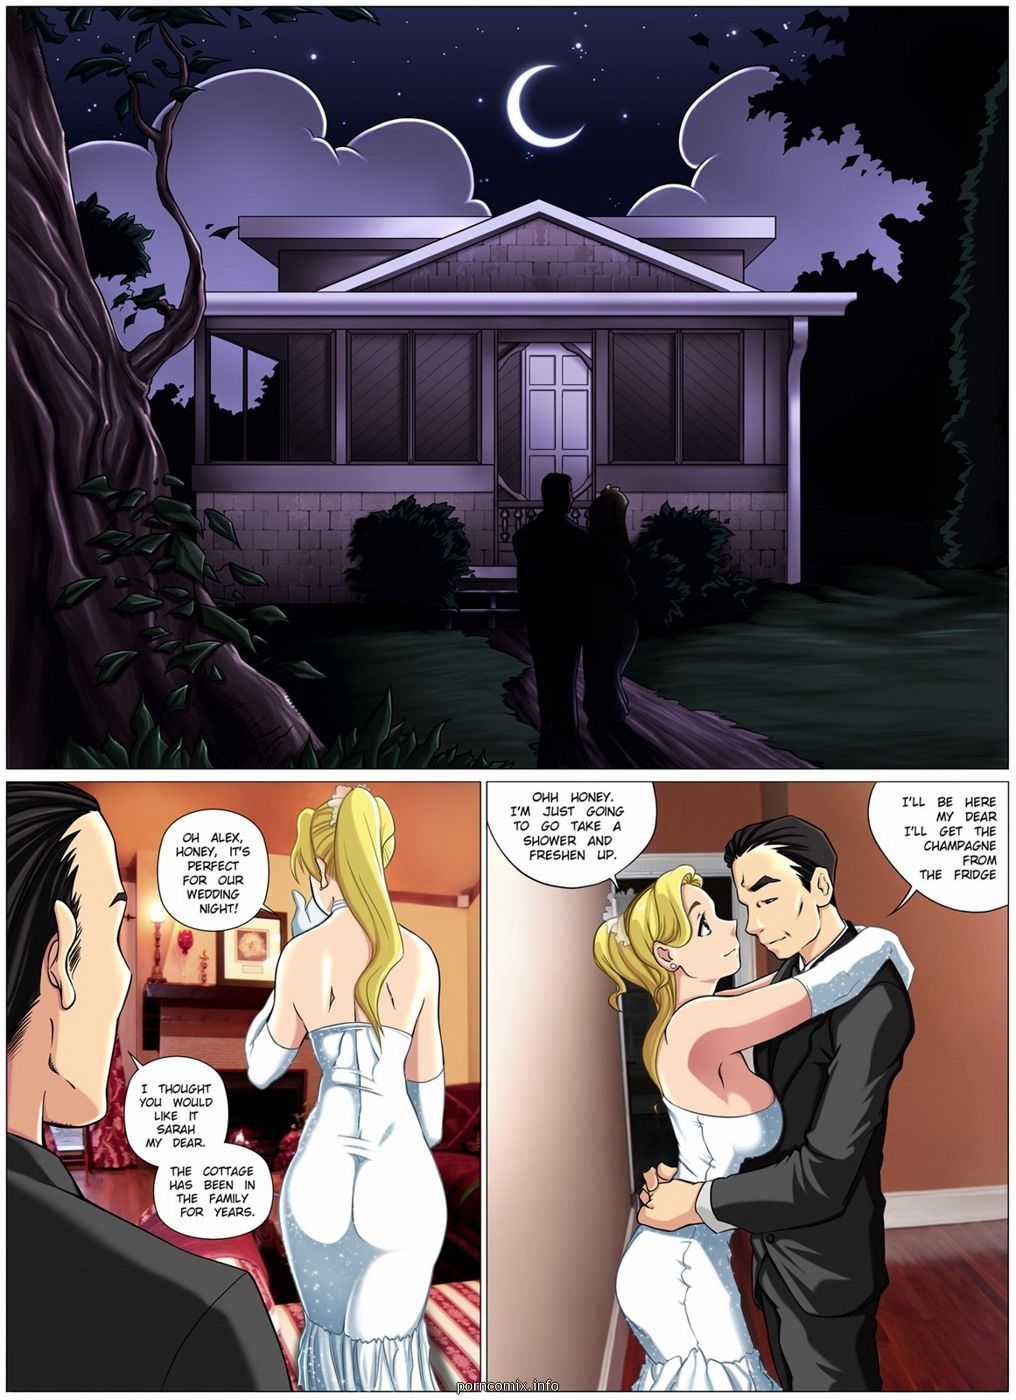 Melkormancin- Monster Wedding Night page 1